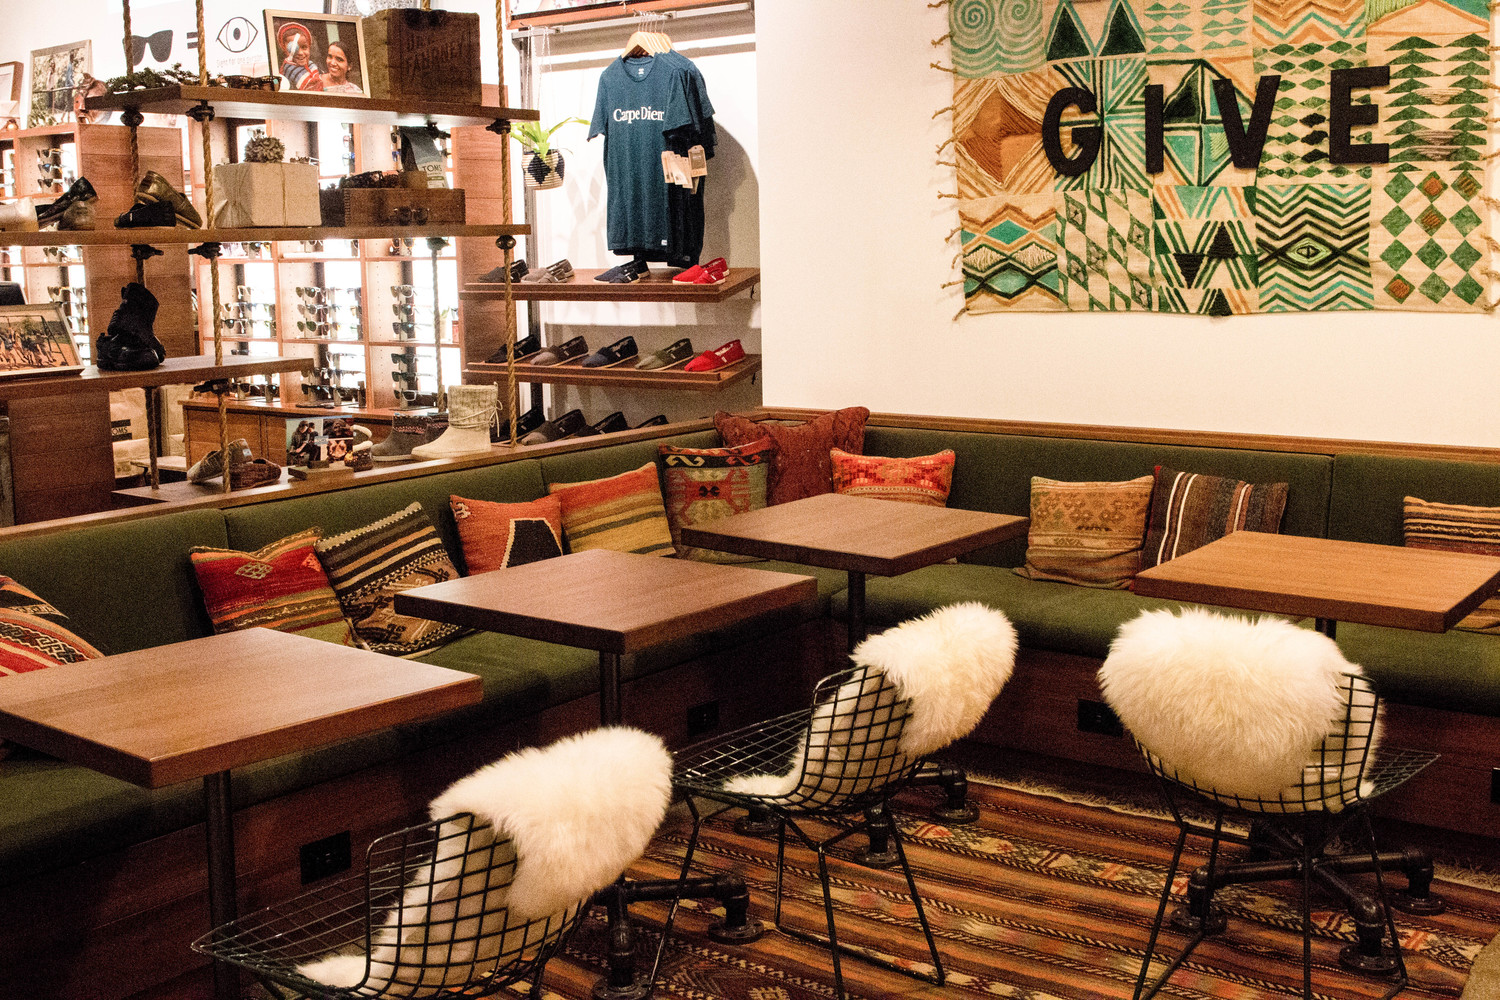 TOMS Shoes Retail Store + Cafe in Chicago Illinois by interior studio Wilder Design Co. — wilder design co.